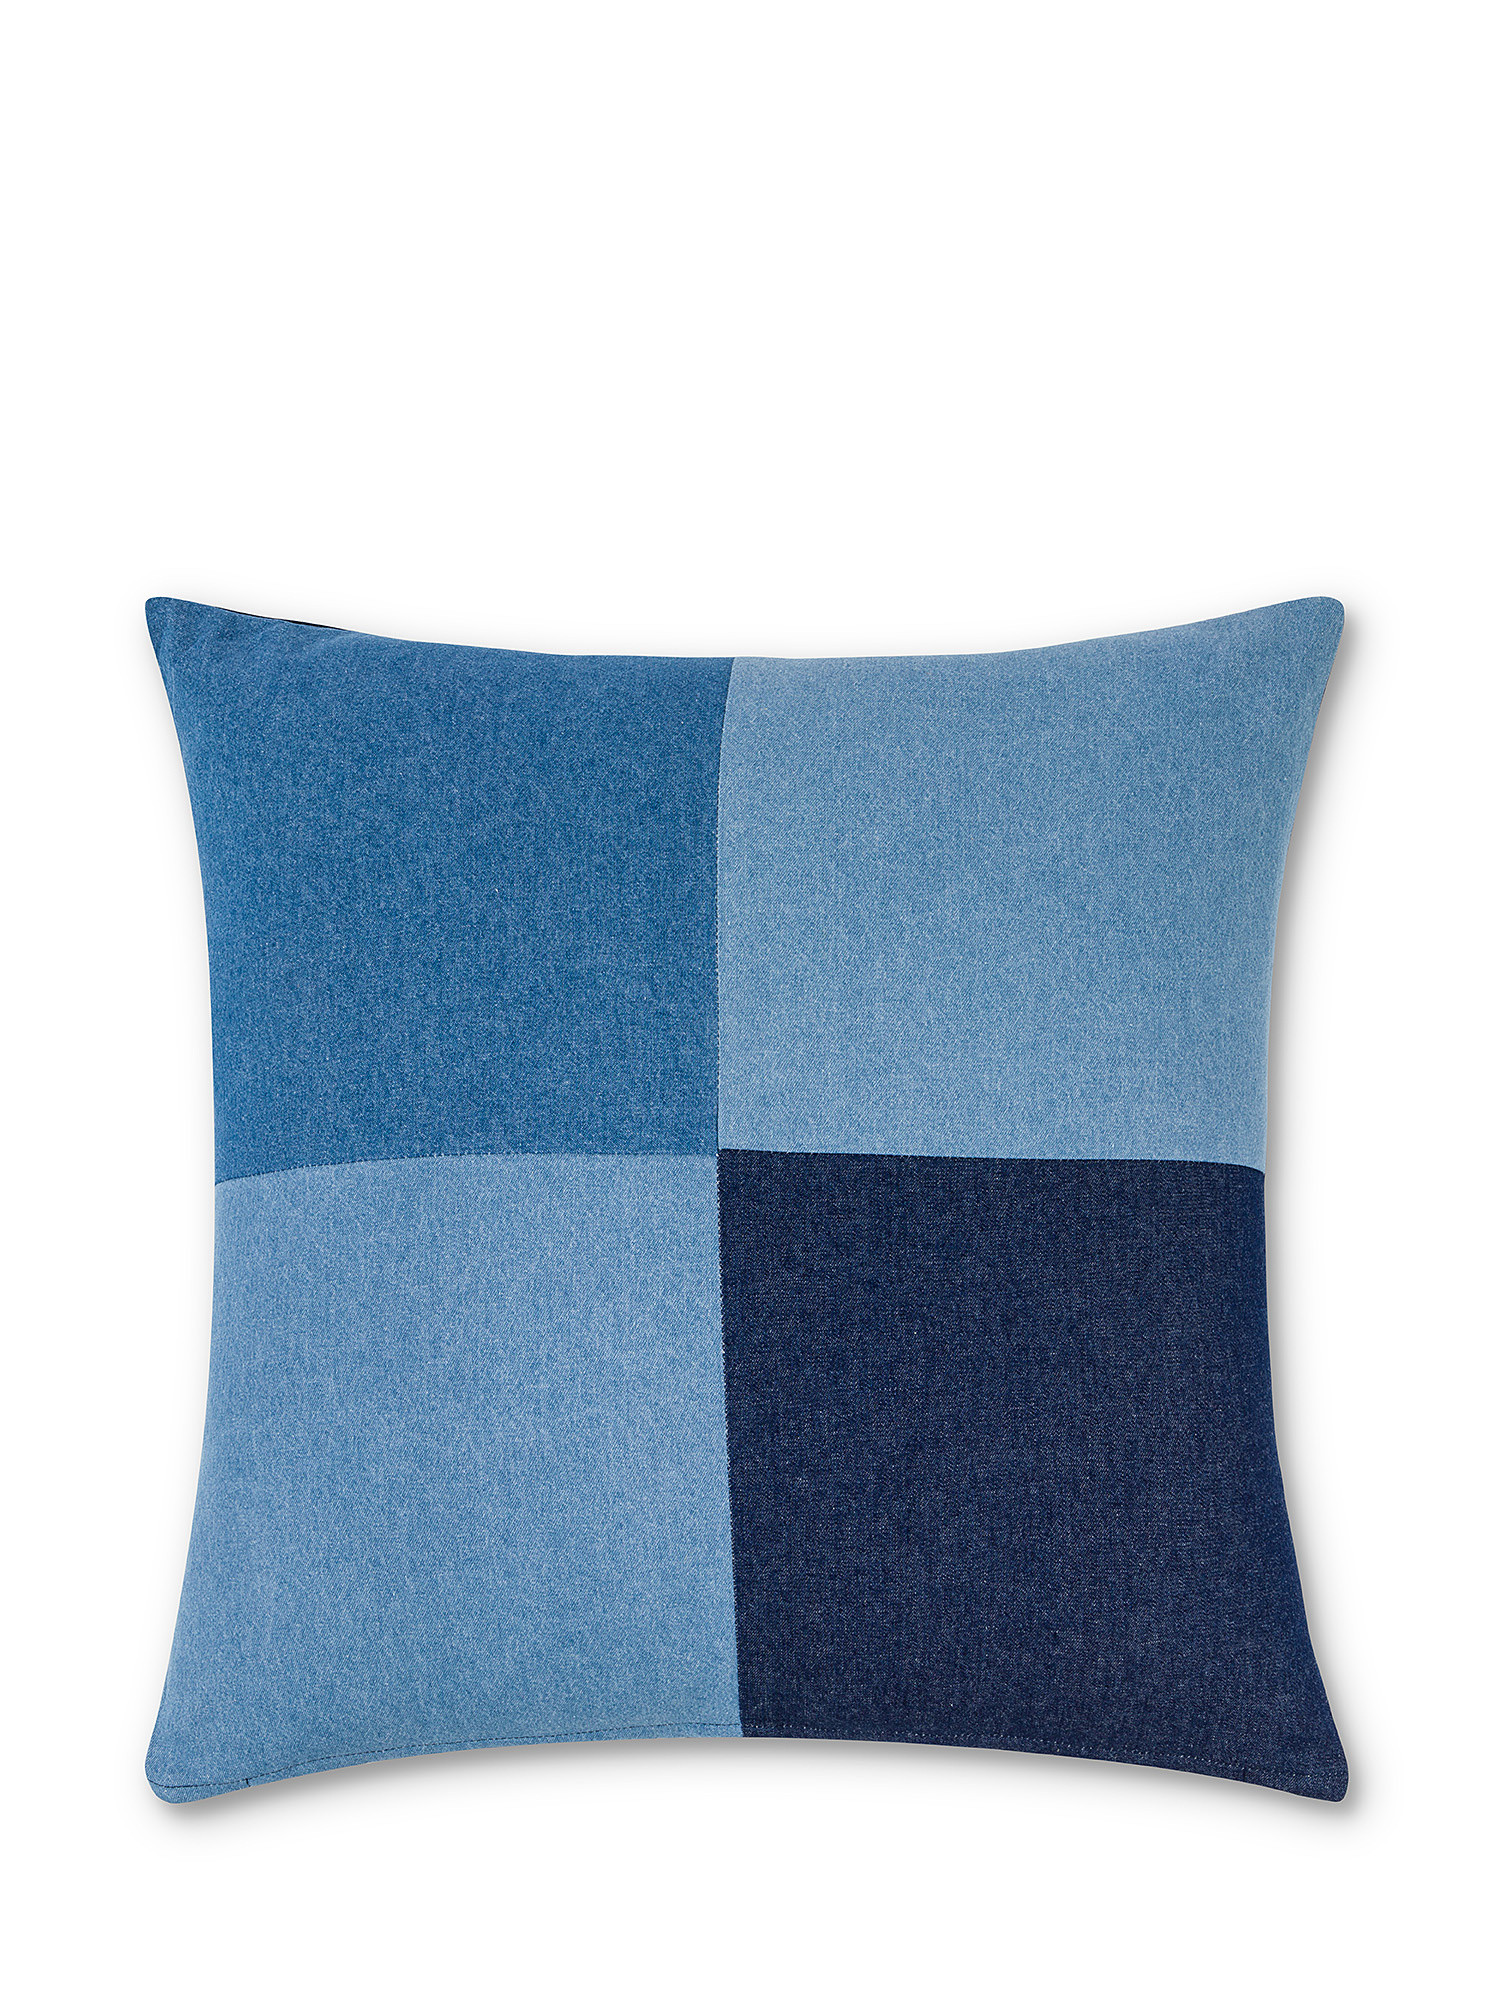 Cuscino cotone denim motivo patch 45x45cm, Azzurro, large image number 0